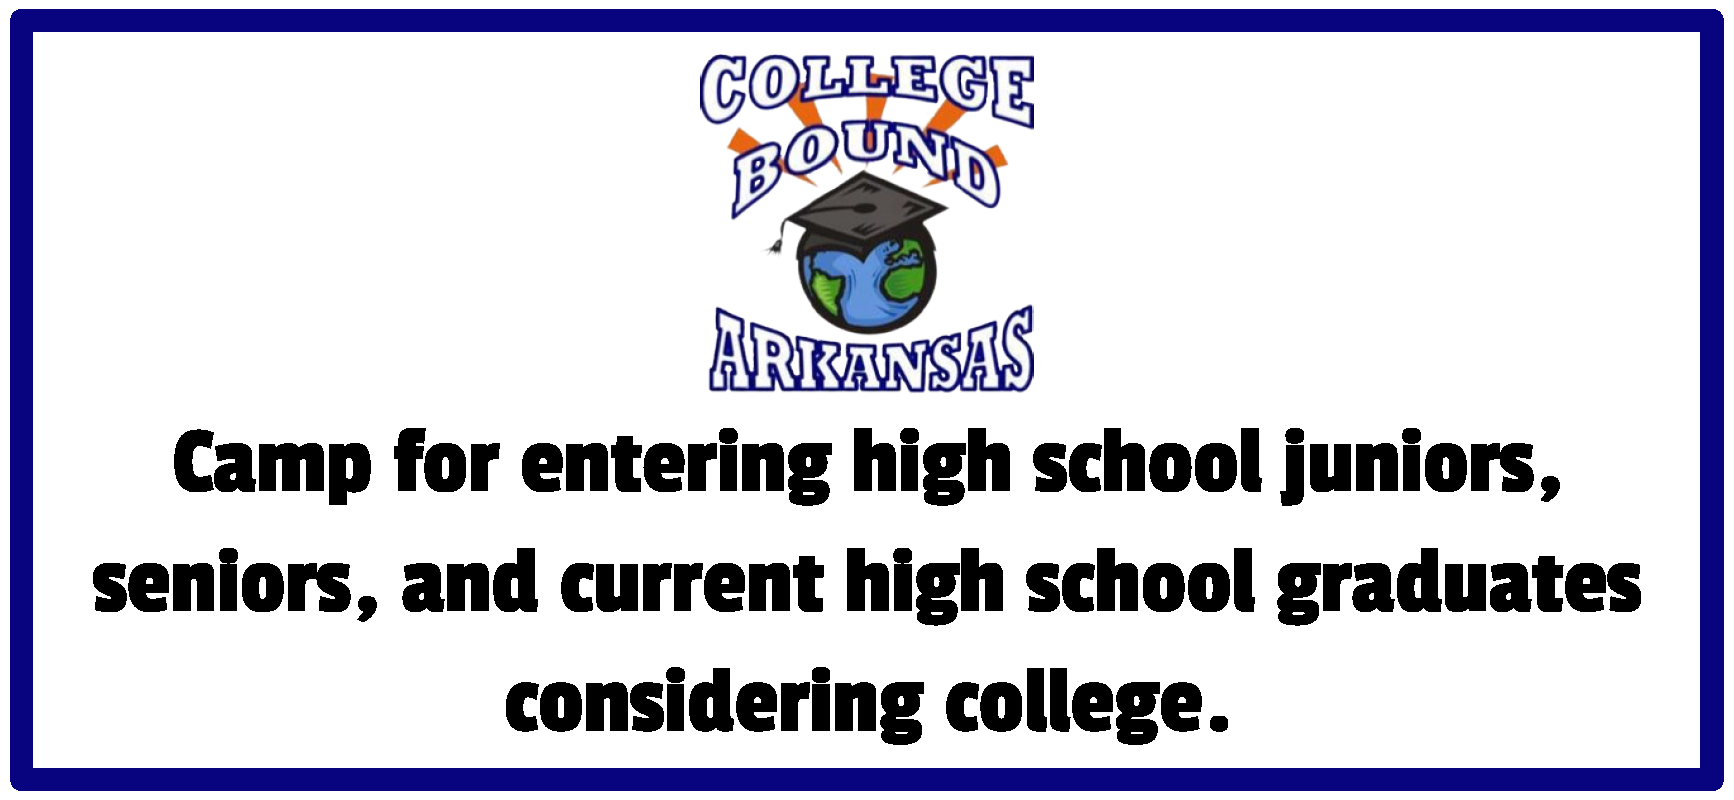 Camp for entering high school juniors, seniors, and current high school graduates considering college.